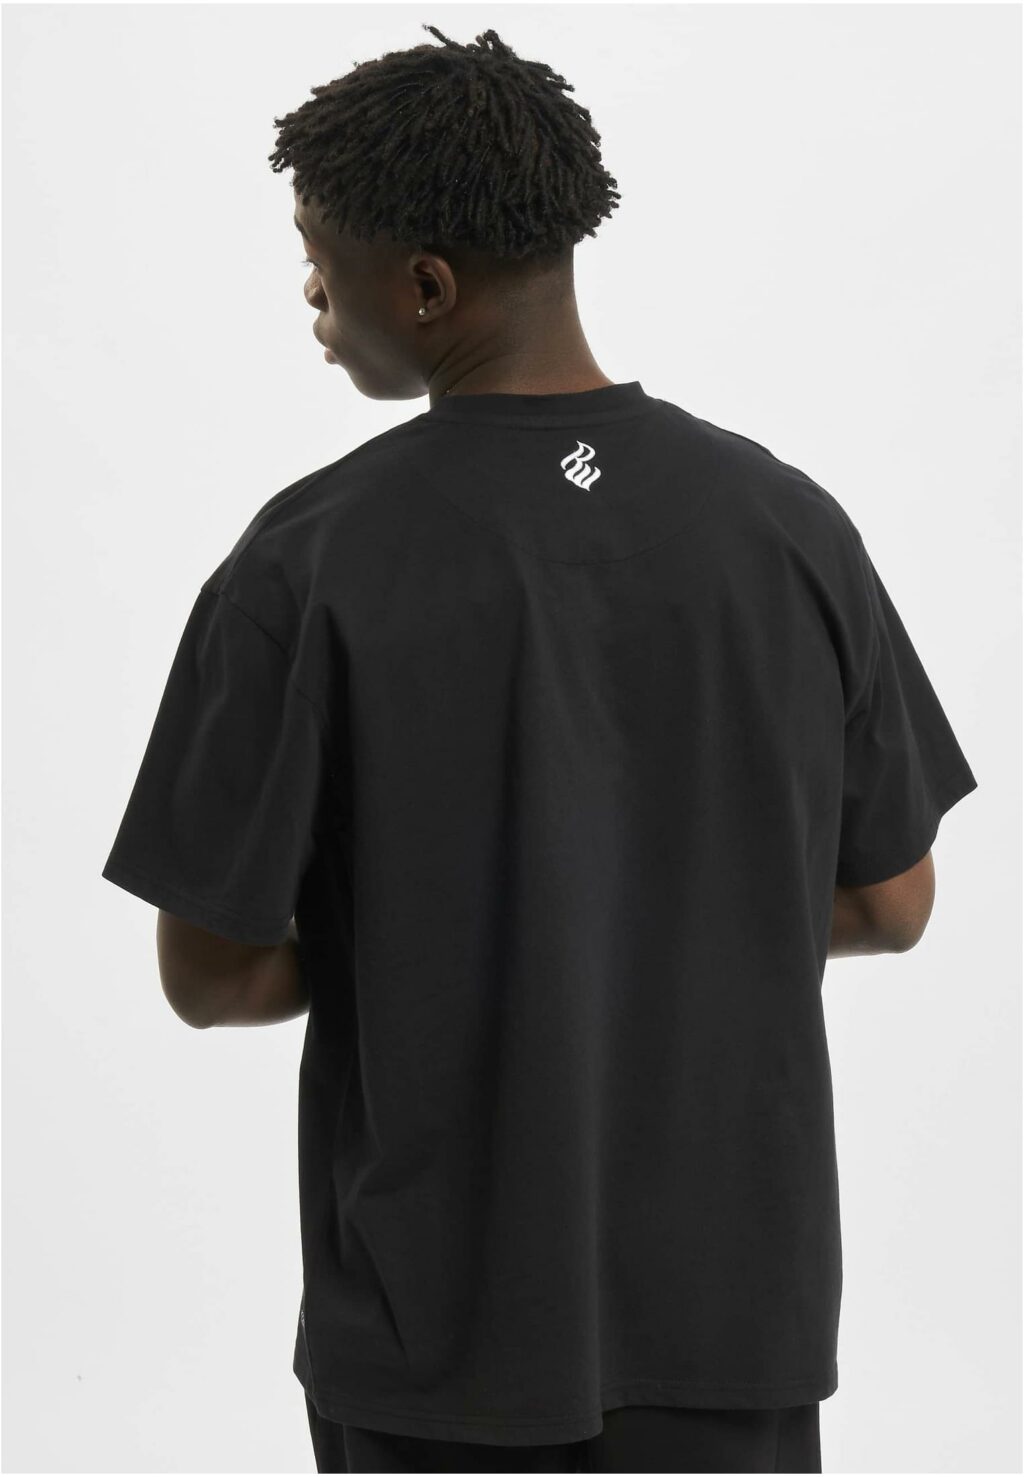 Rocawear Woodhaven T-Shirt black RWTS078